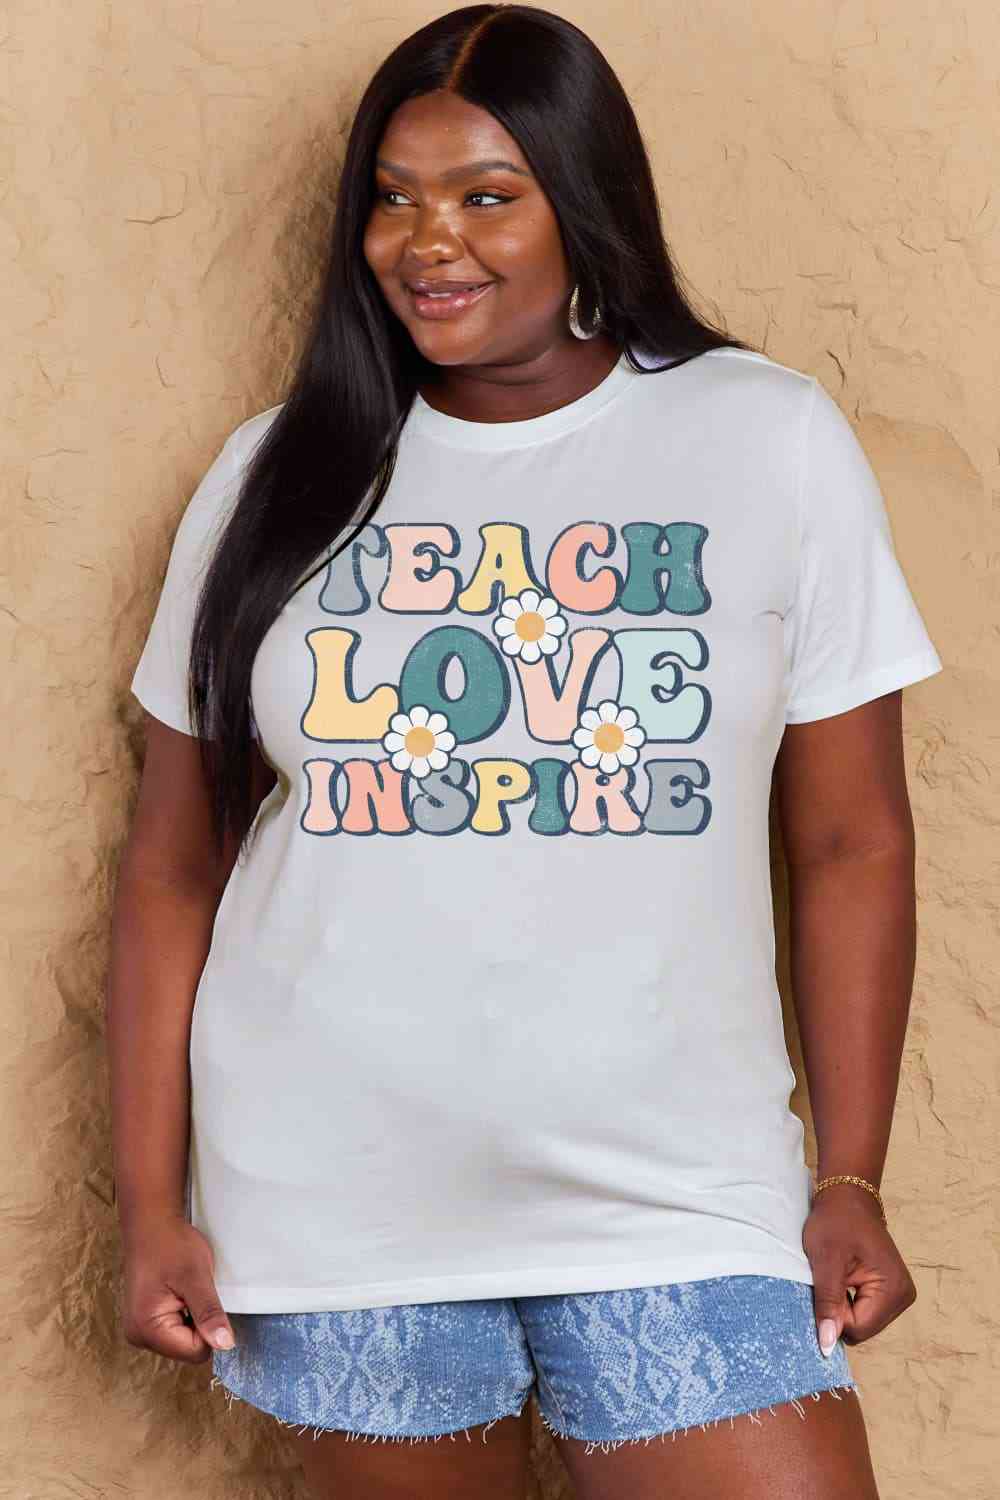 Simply Love Full Size TEACH LOVE INSPIRE Graphic Cotton T-Shirt - TRENDMELO